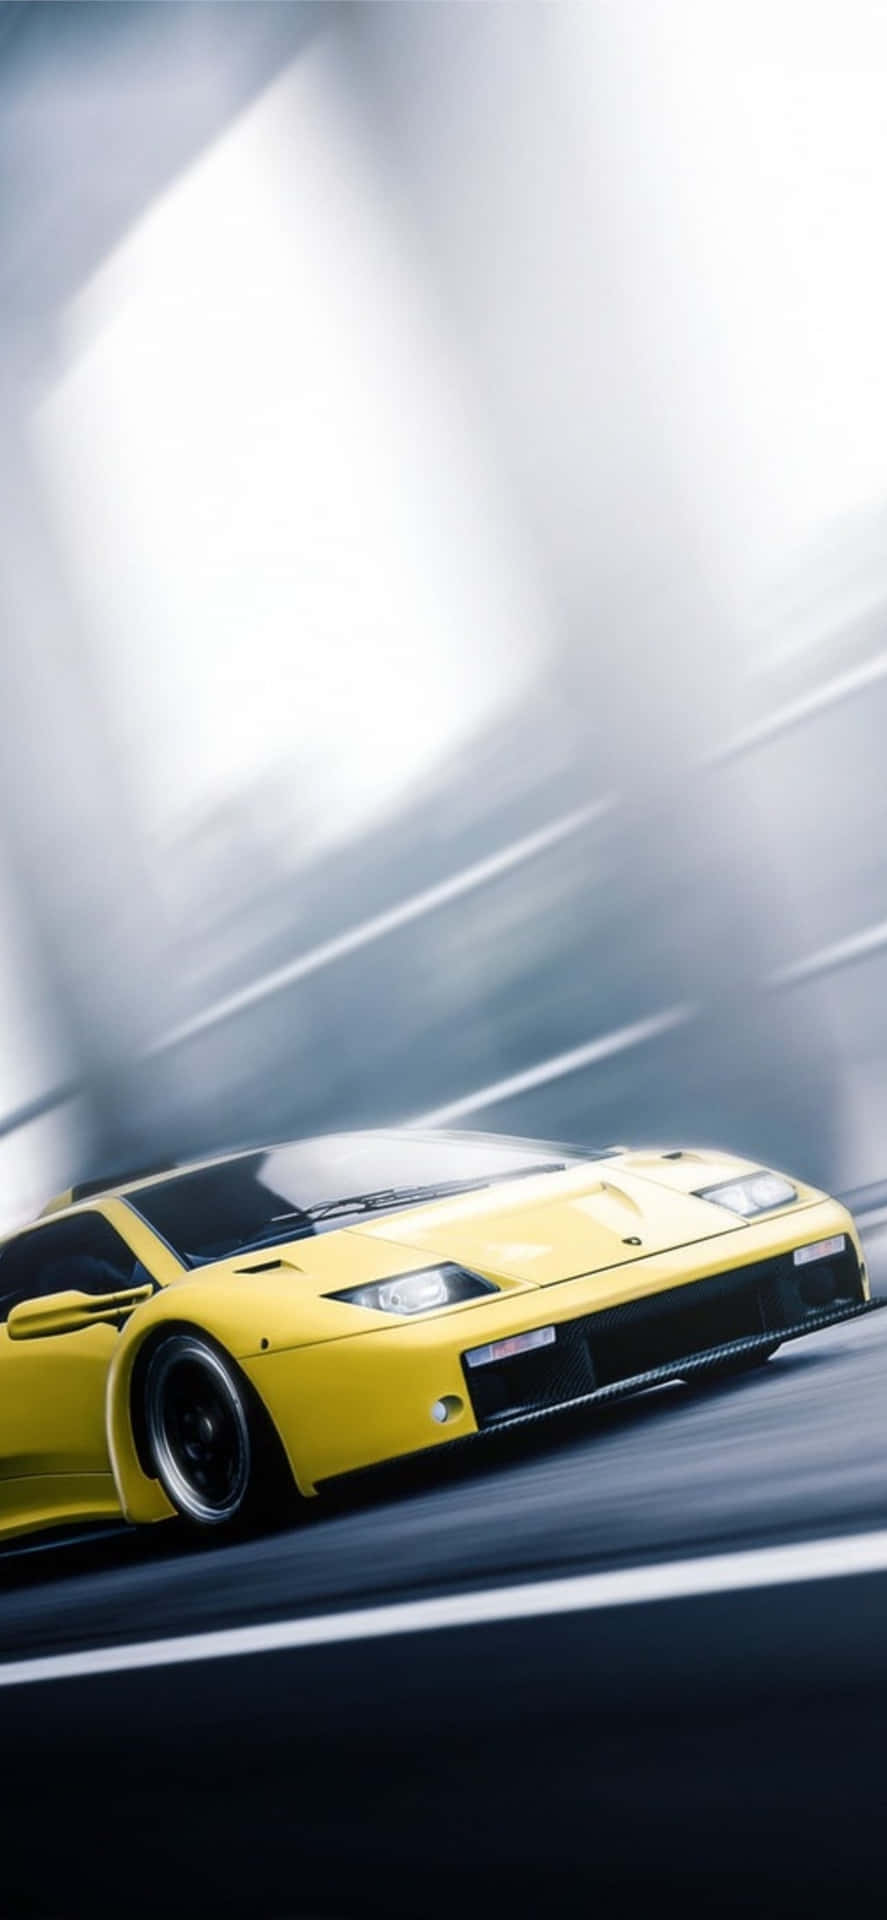 Doing Burnouts In Style - Pixel 3xl Lamborghini